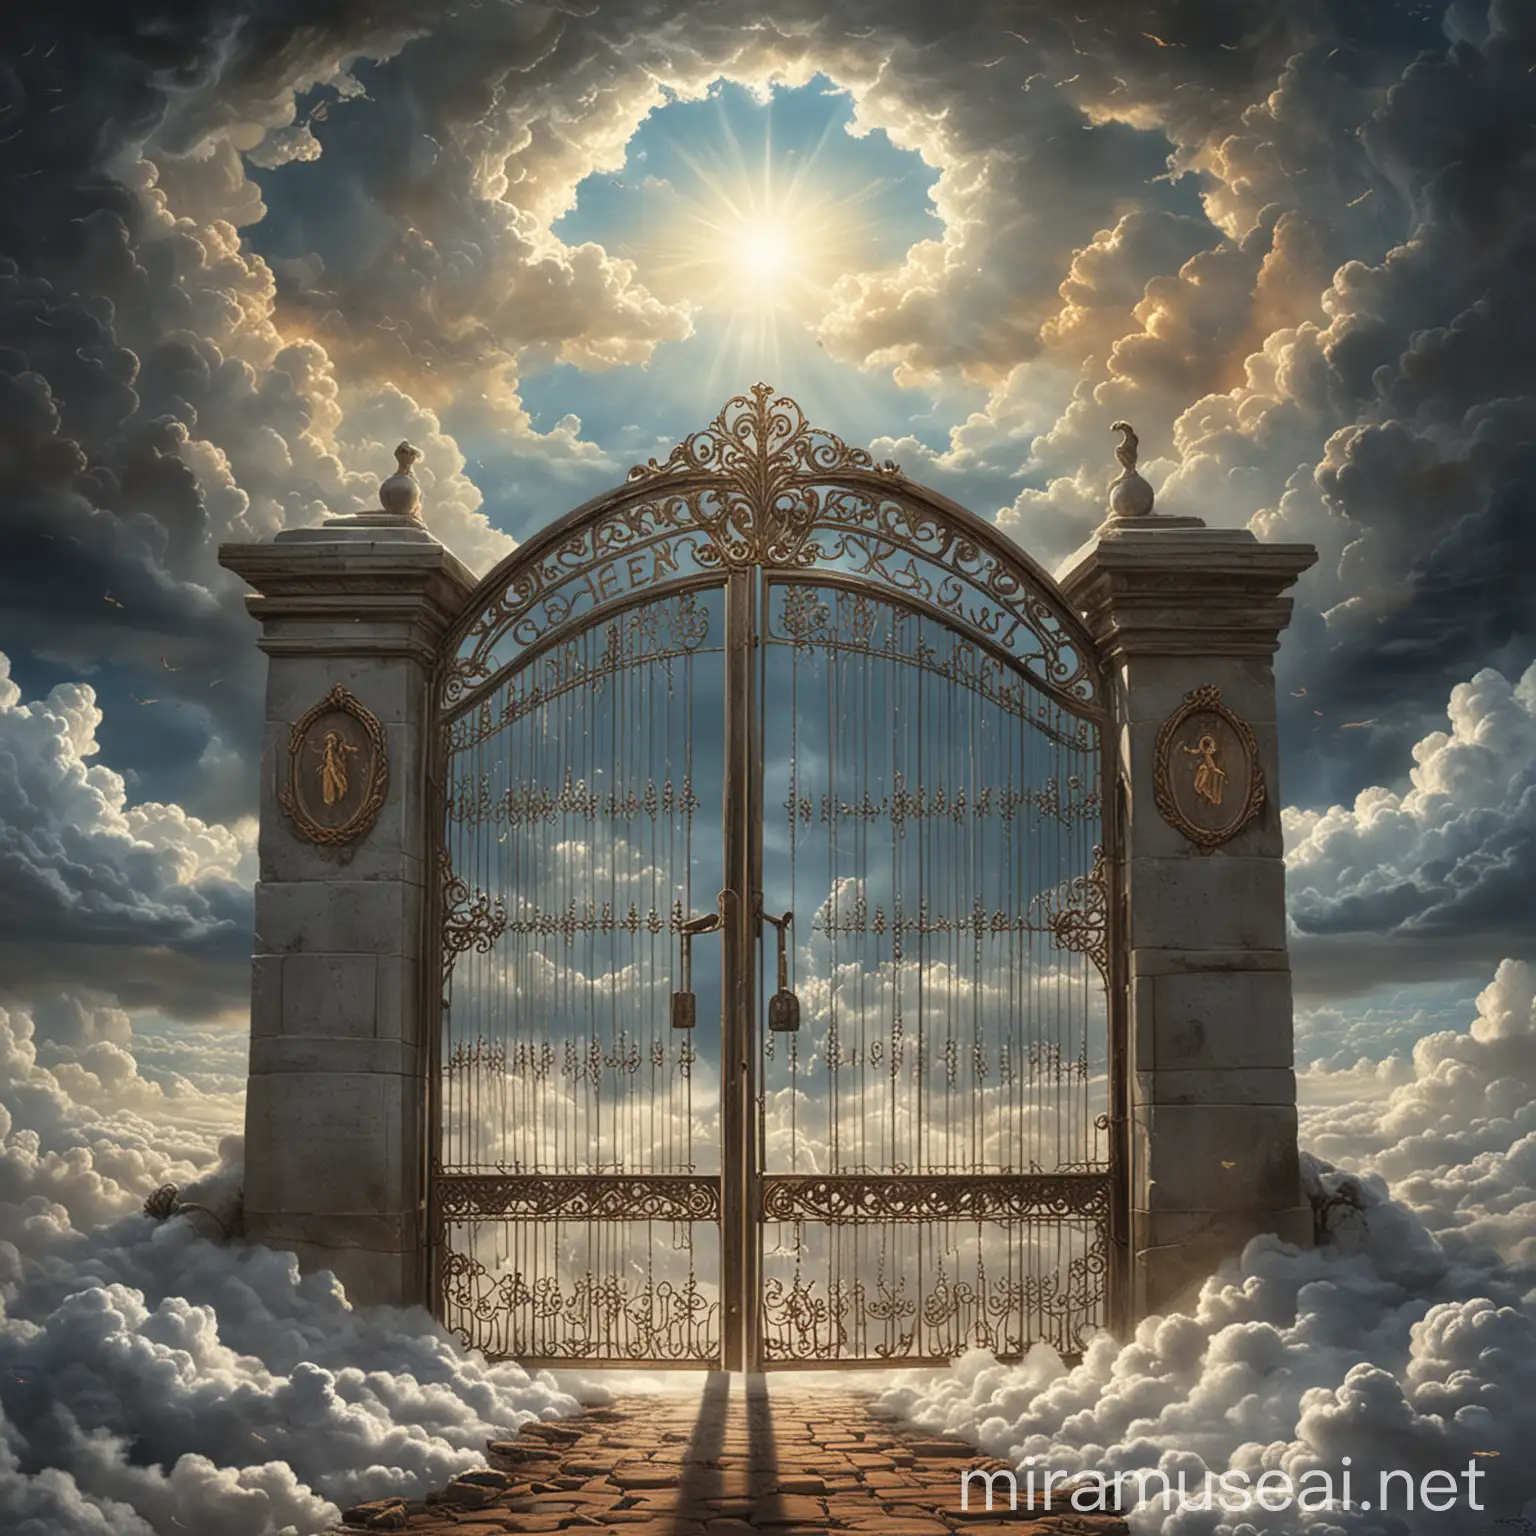 heaven's gates